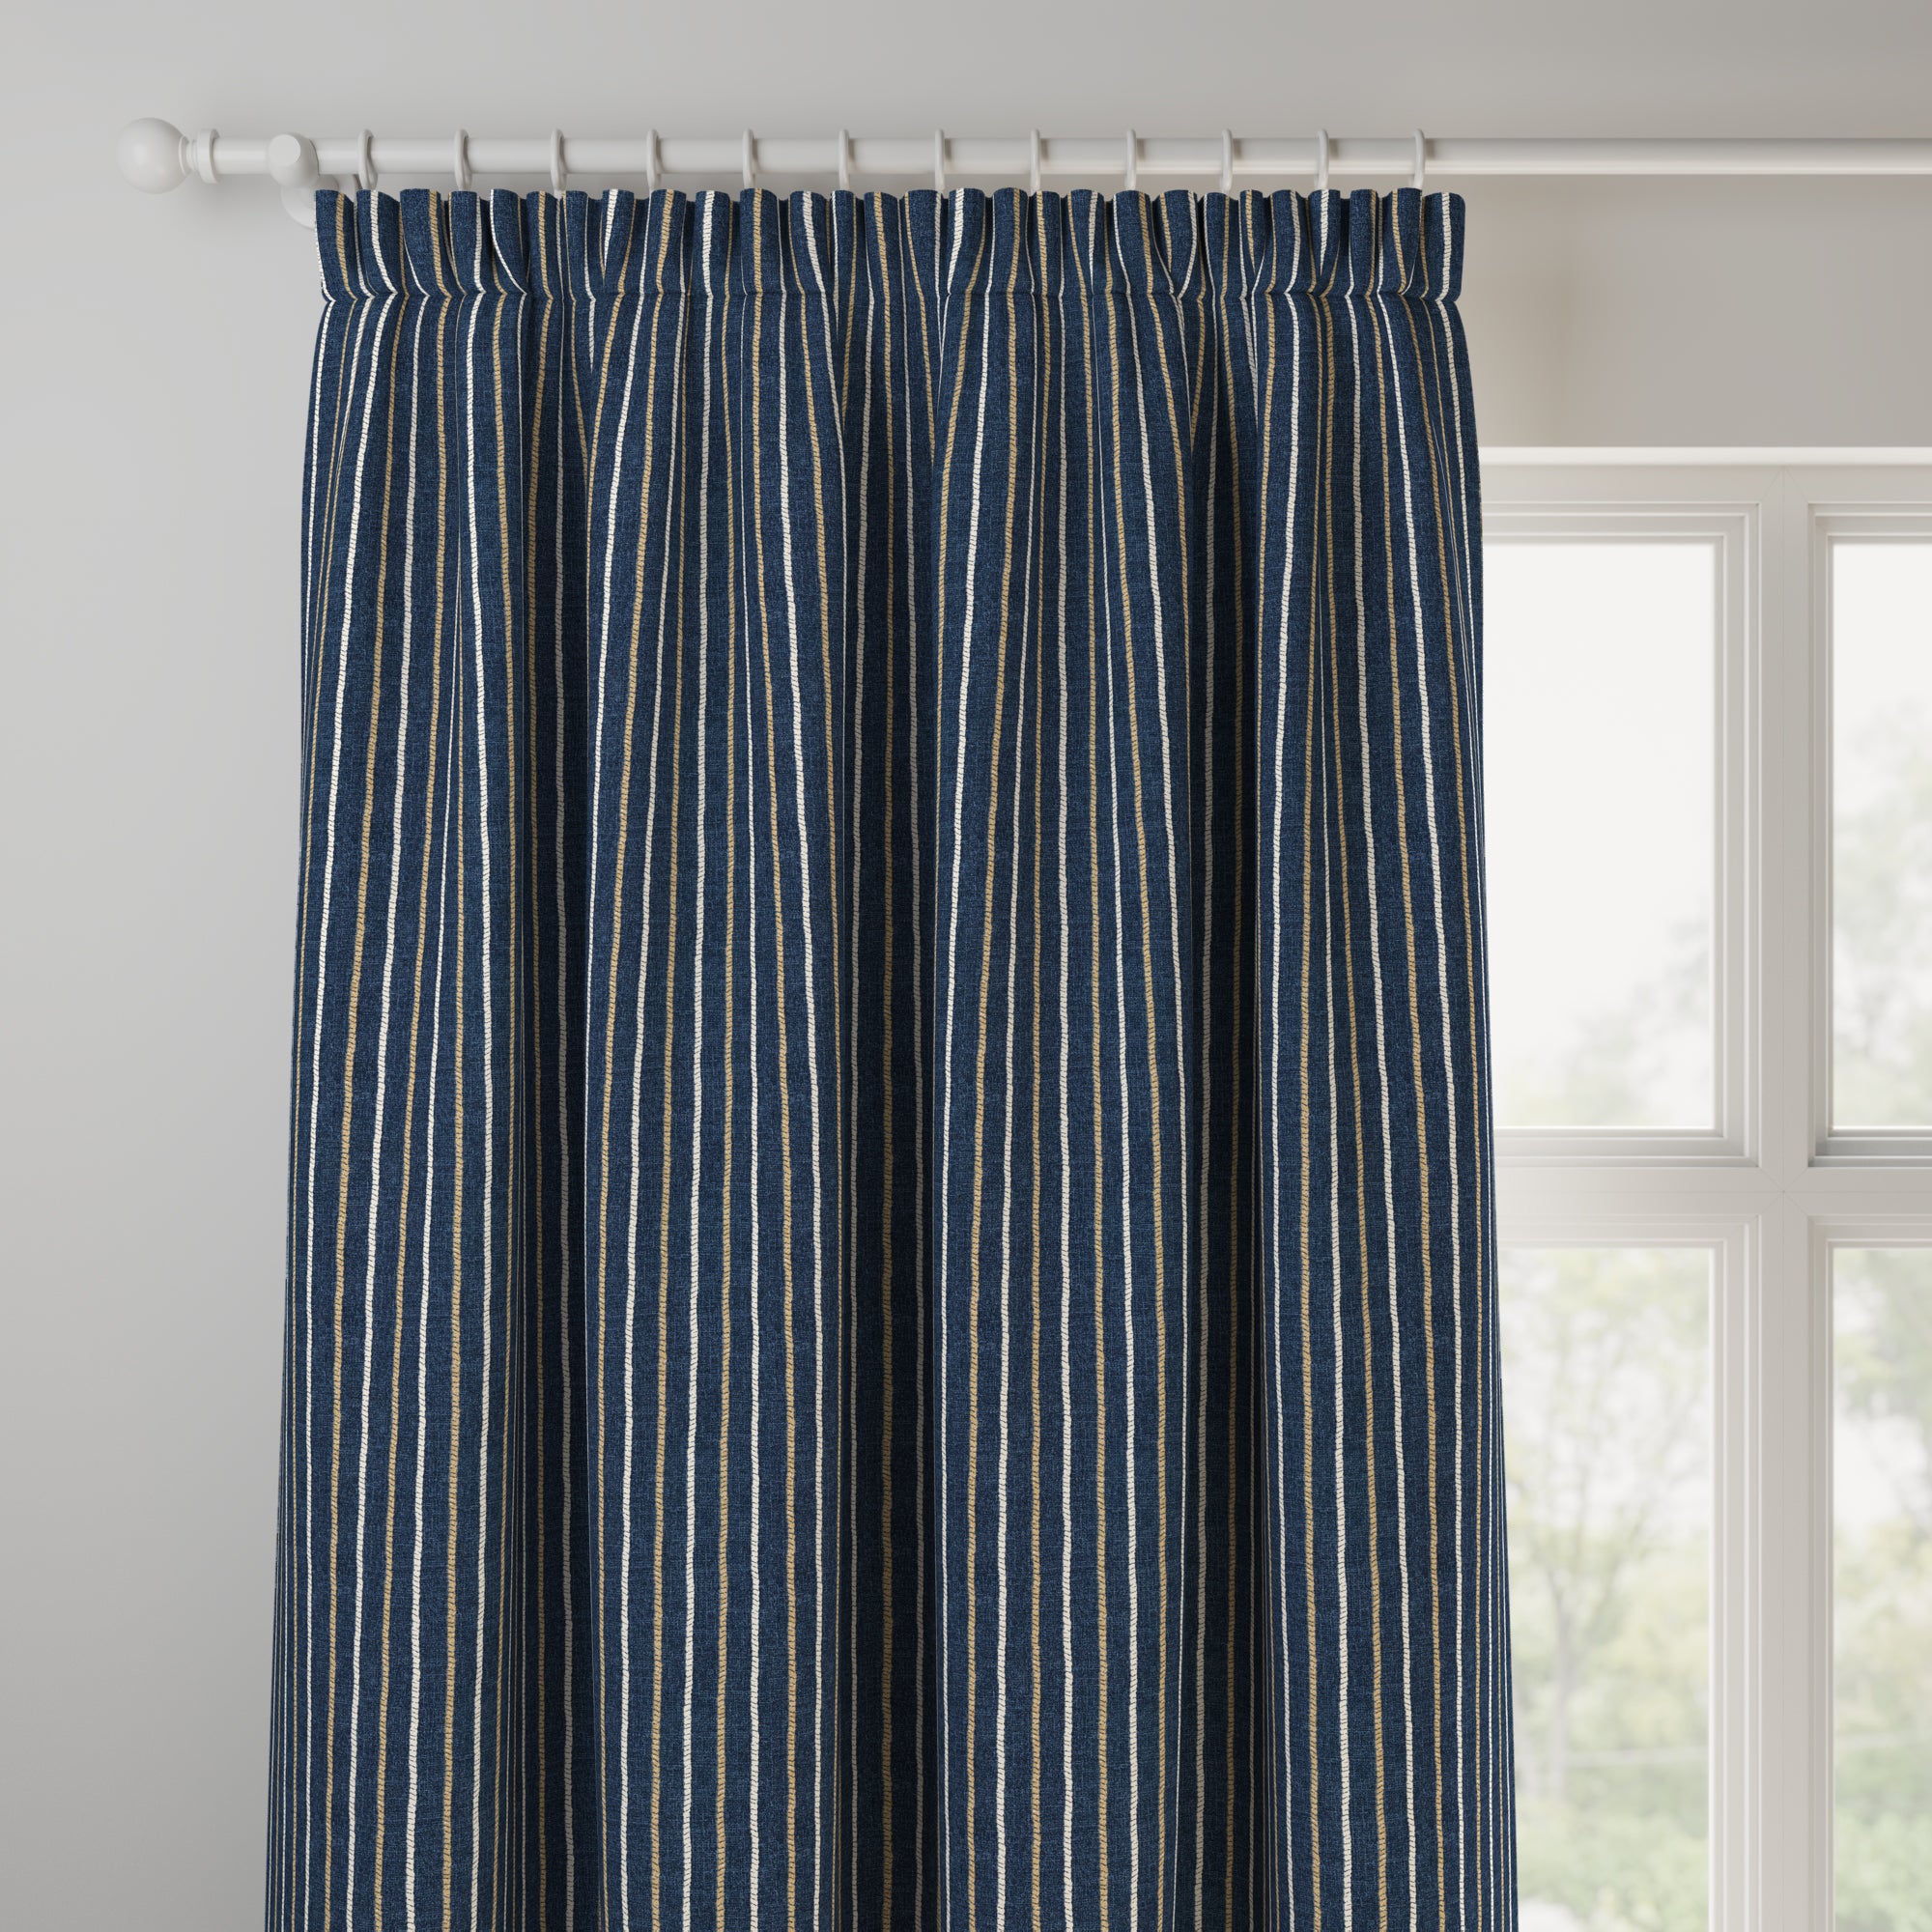 Cromer Stripe Made to Measure Curtains Cromer Stripe Indigo